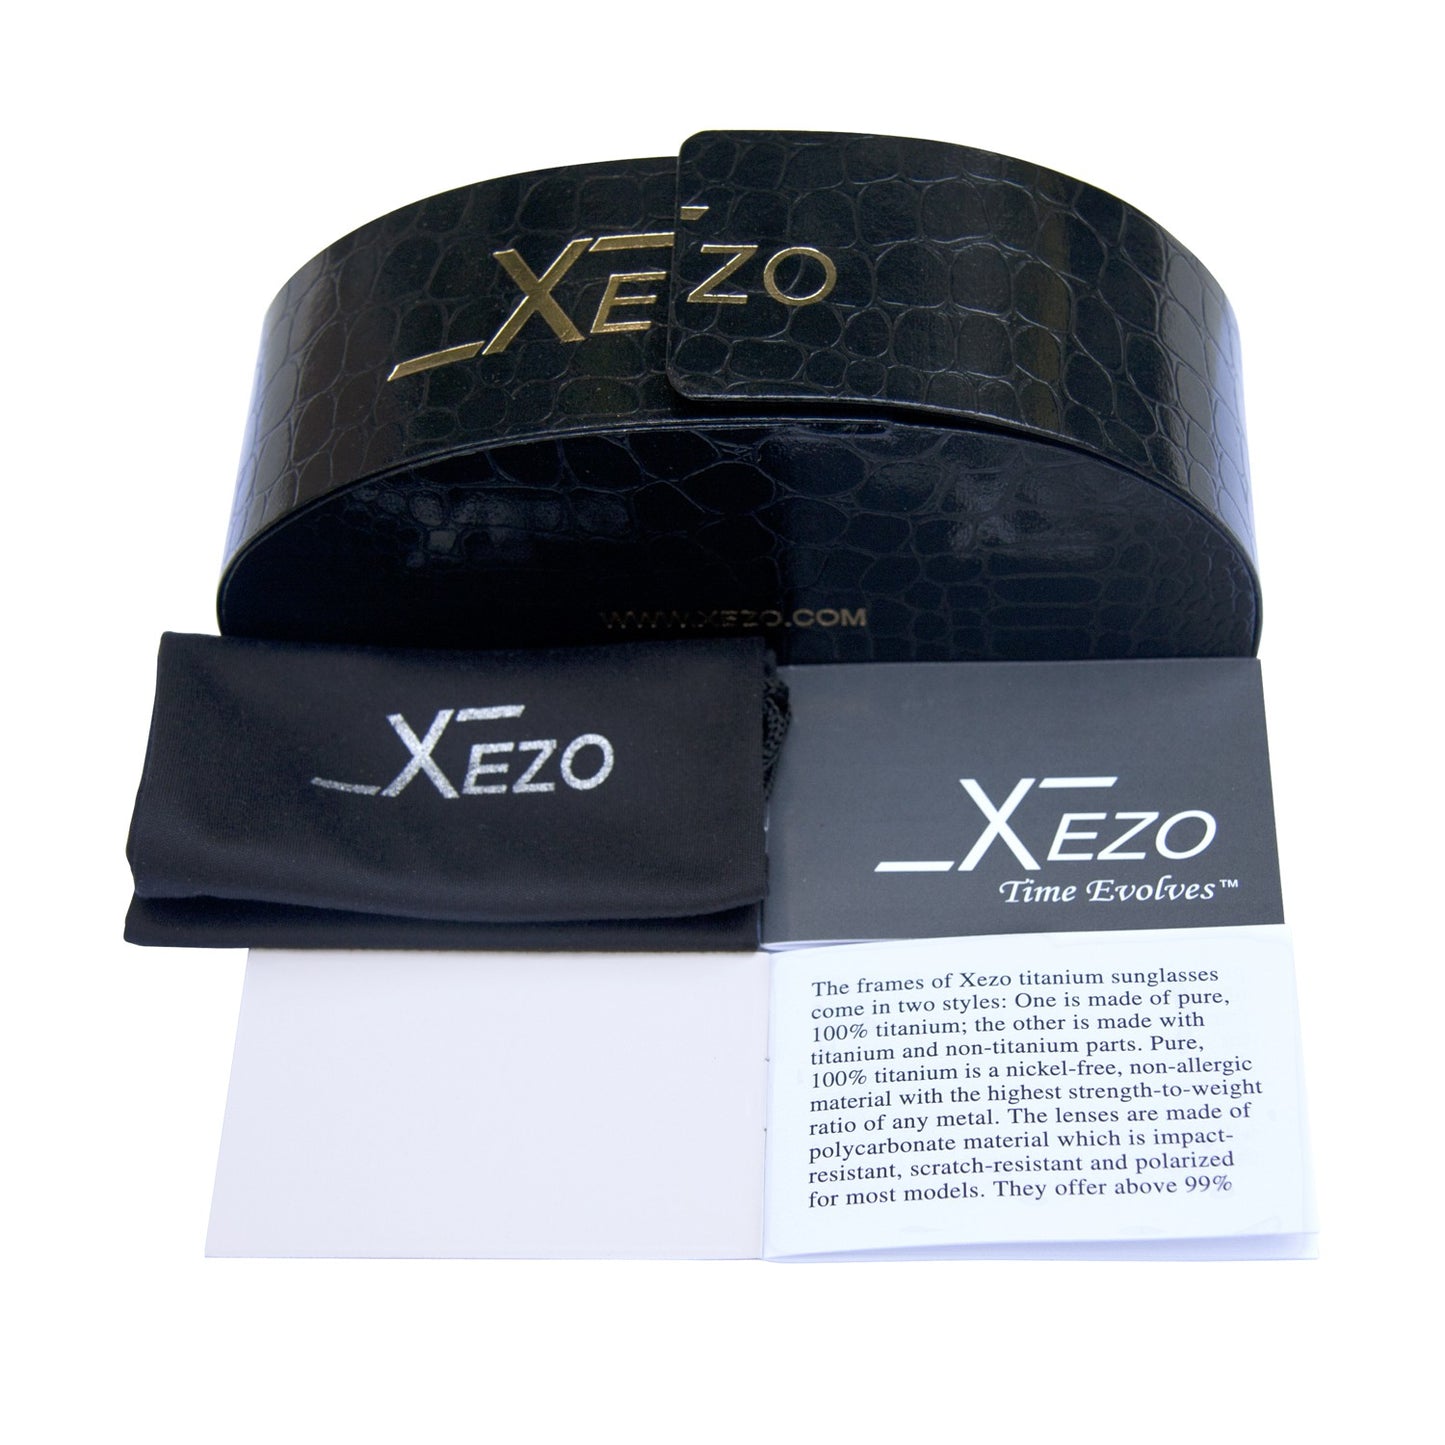 Xezo - Black gift box, black bag, and certificate of the Mustang 500 B sunglasses